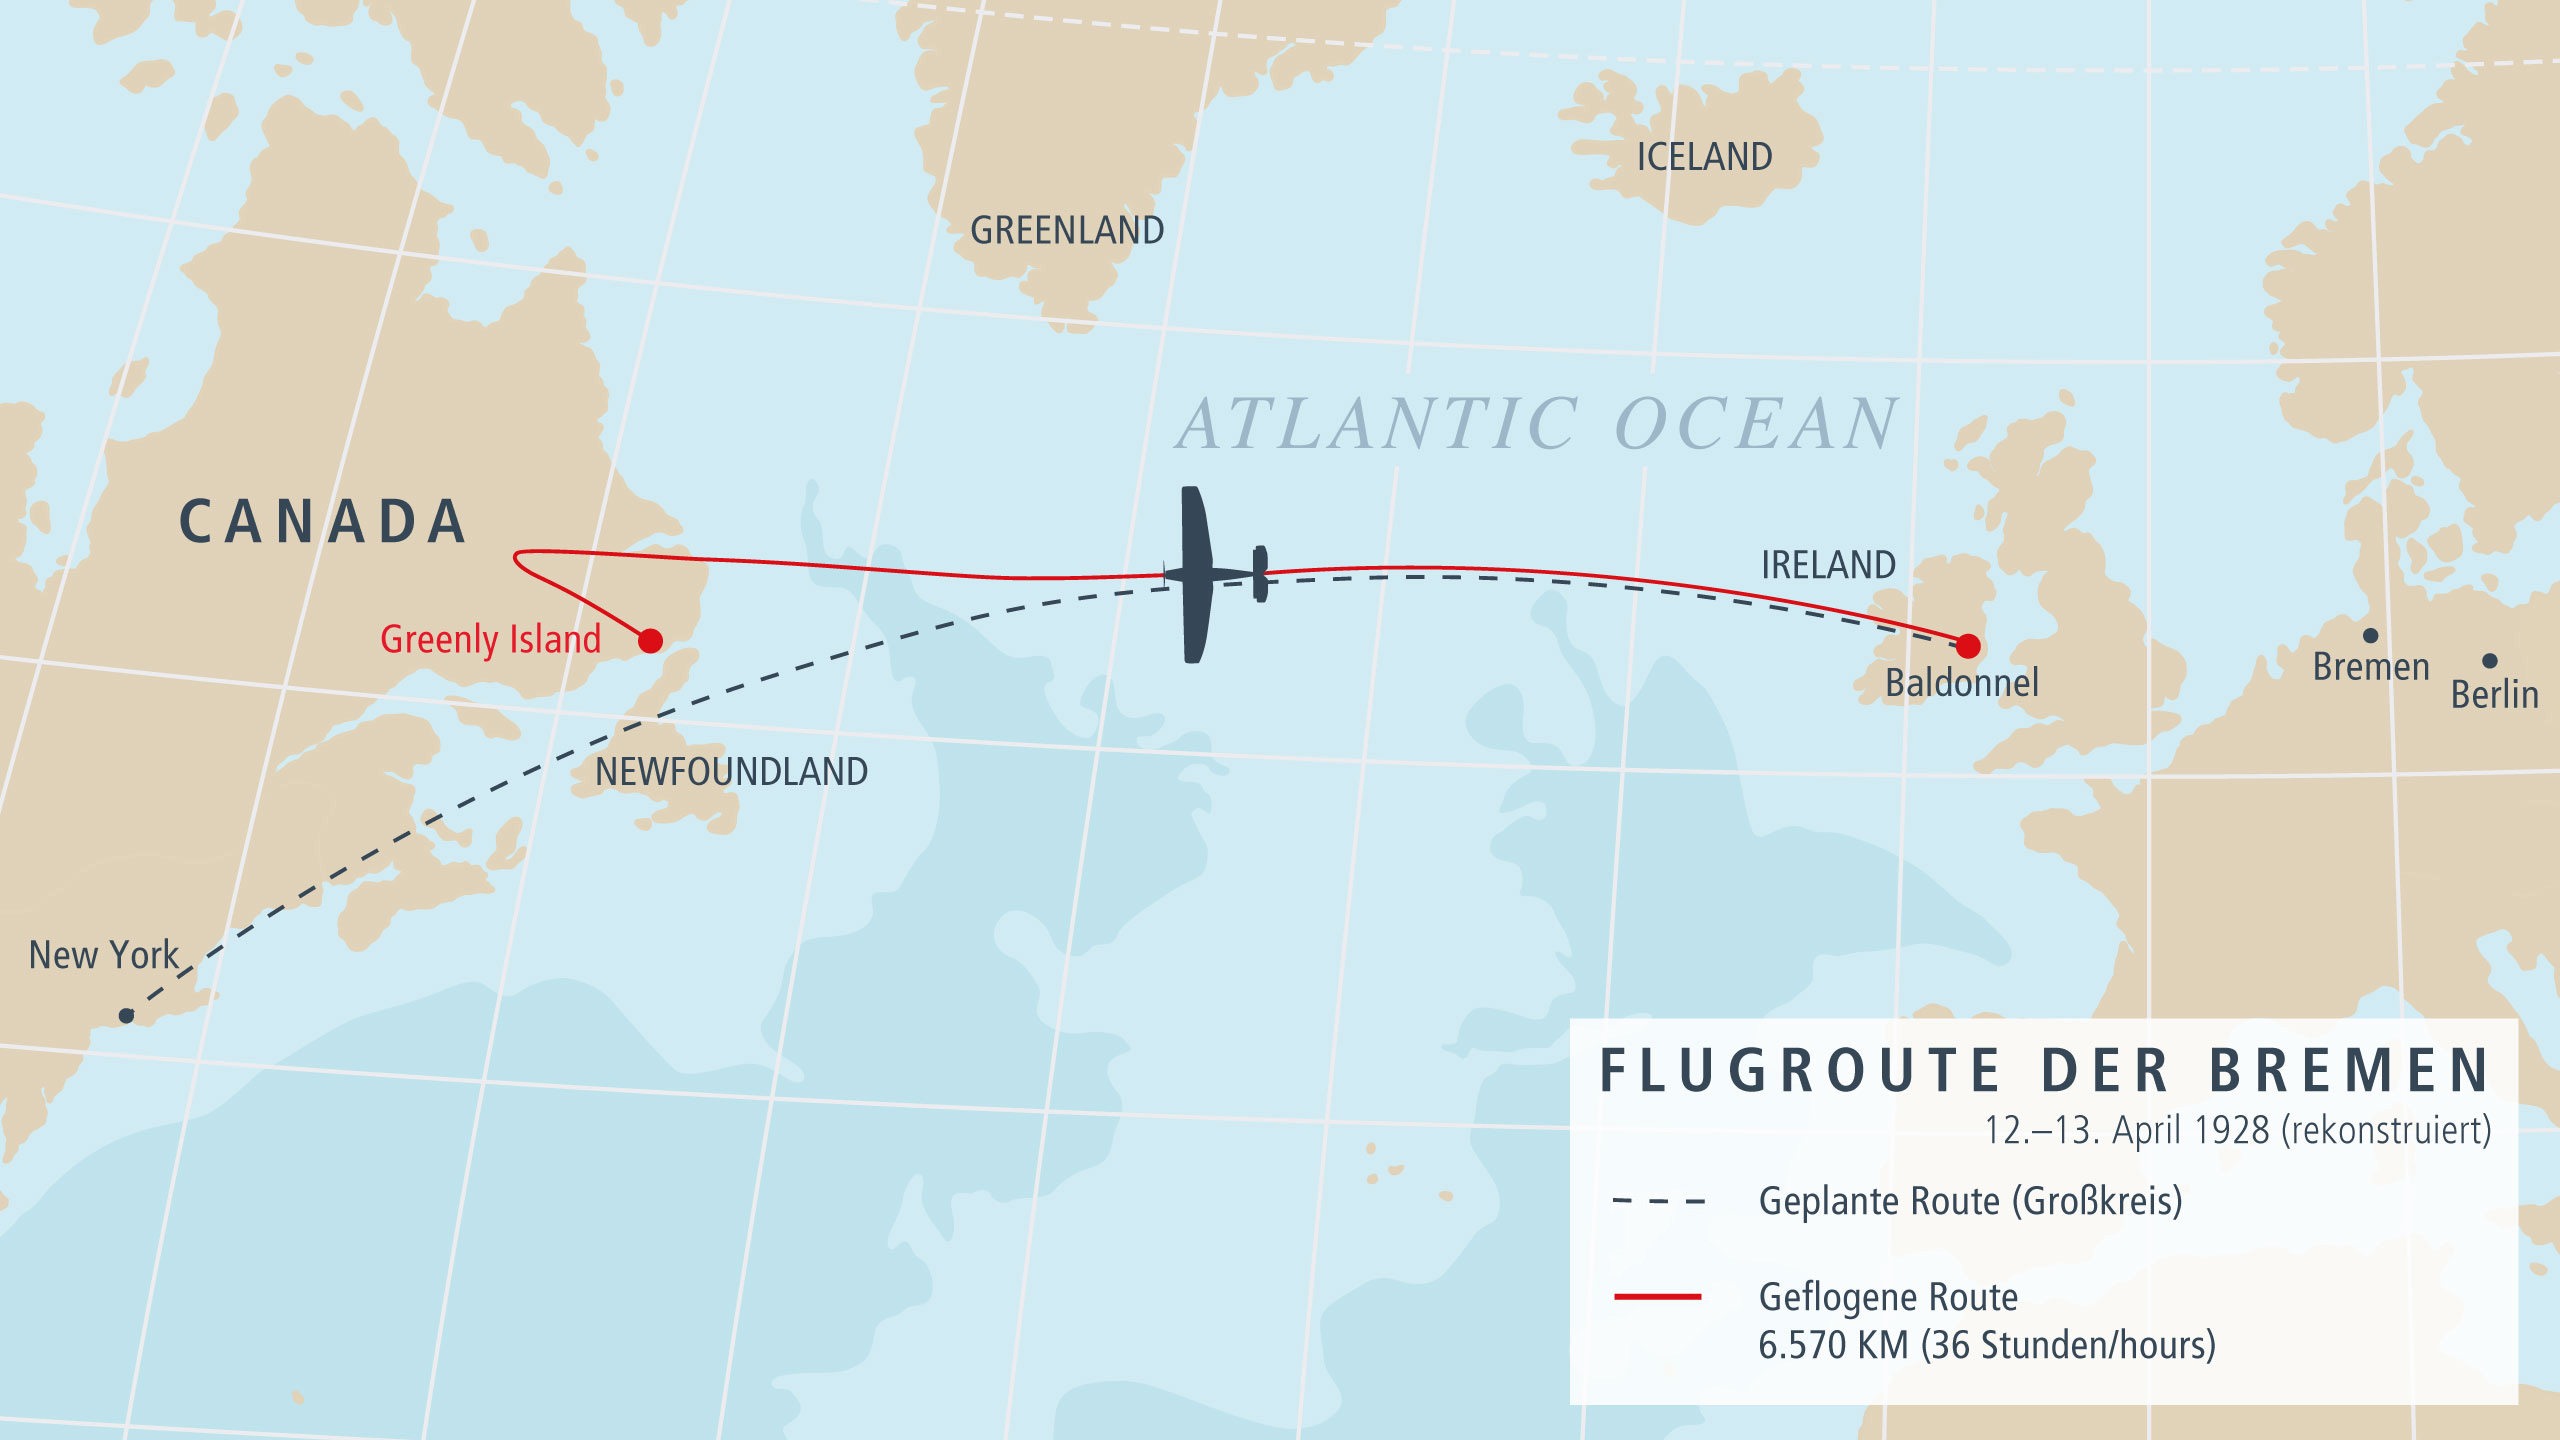 Transatlantic flight from East to West